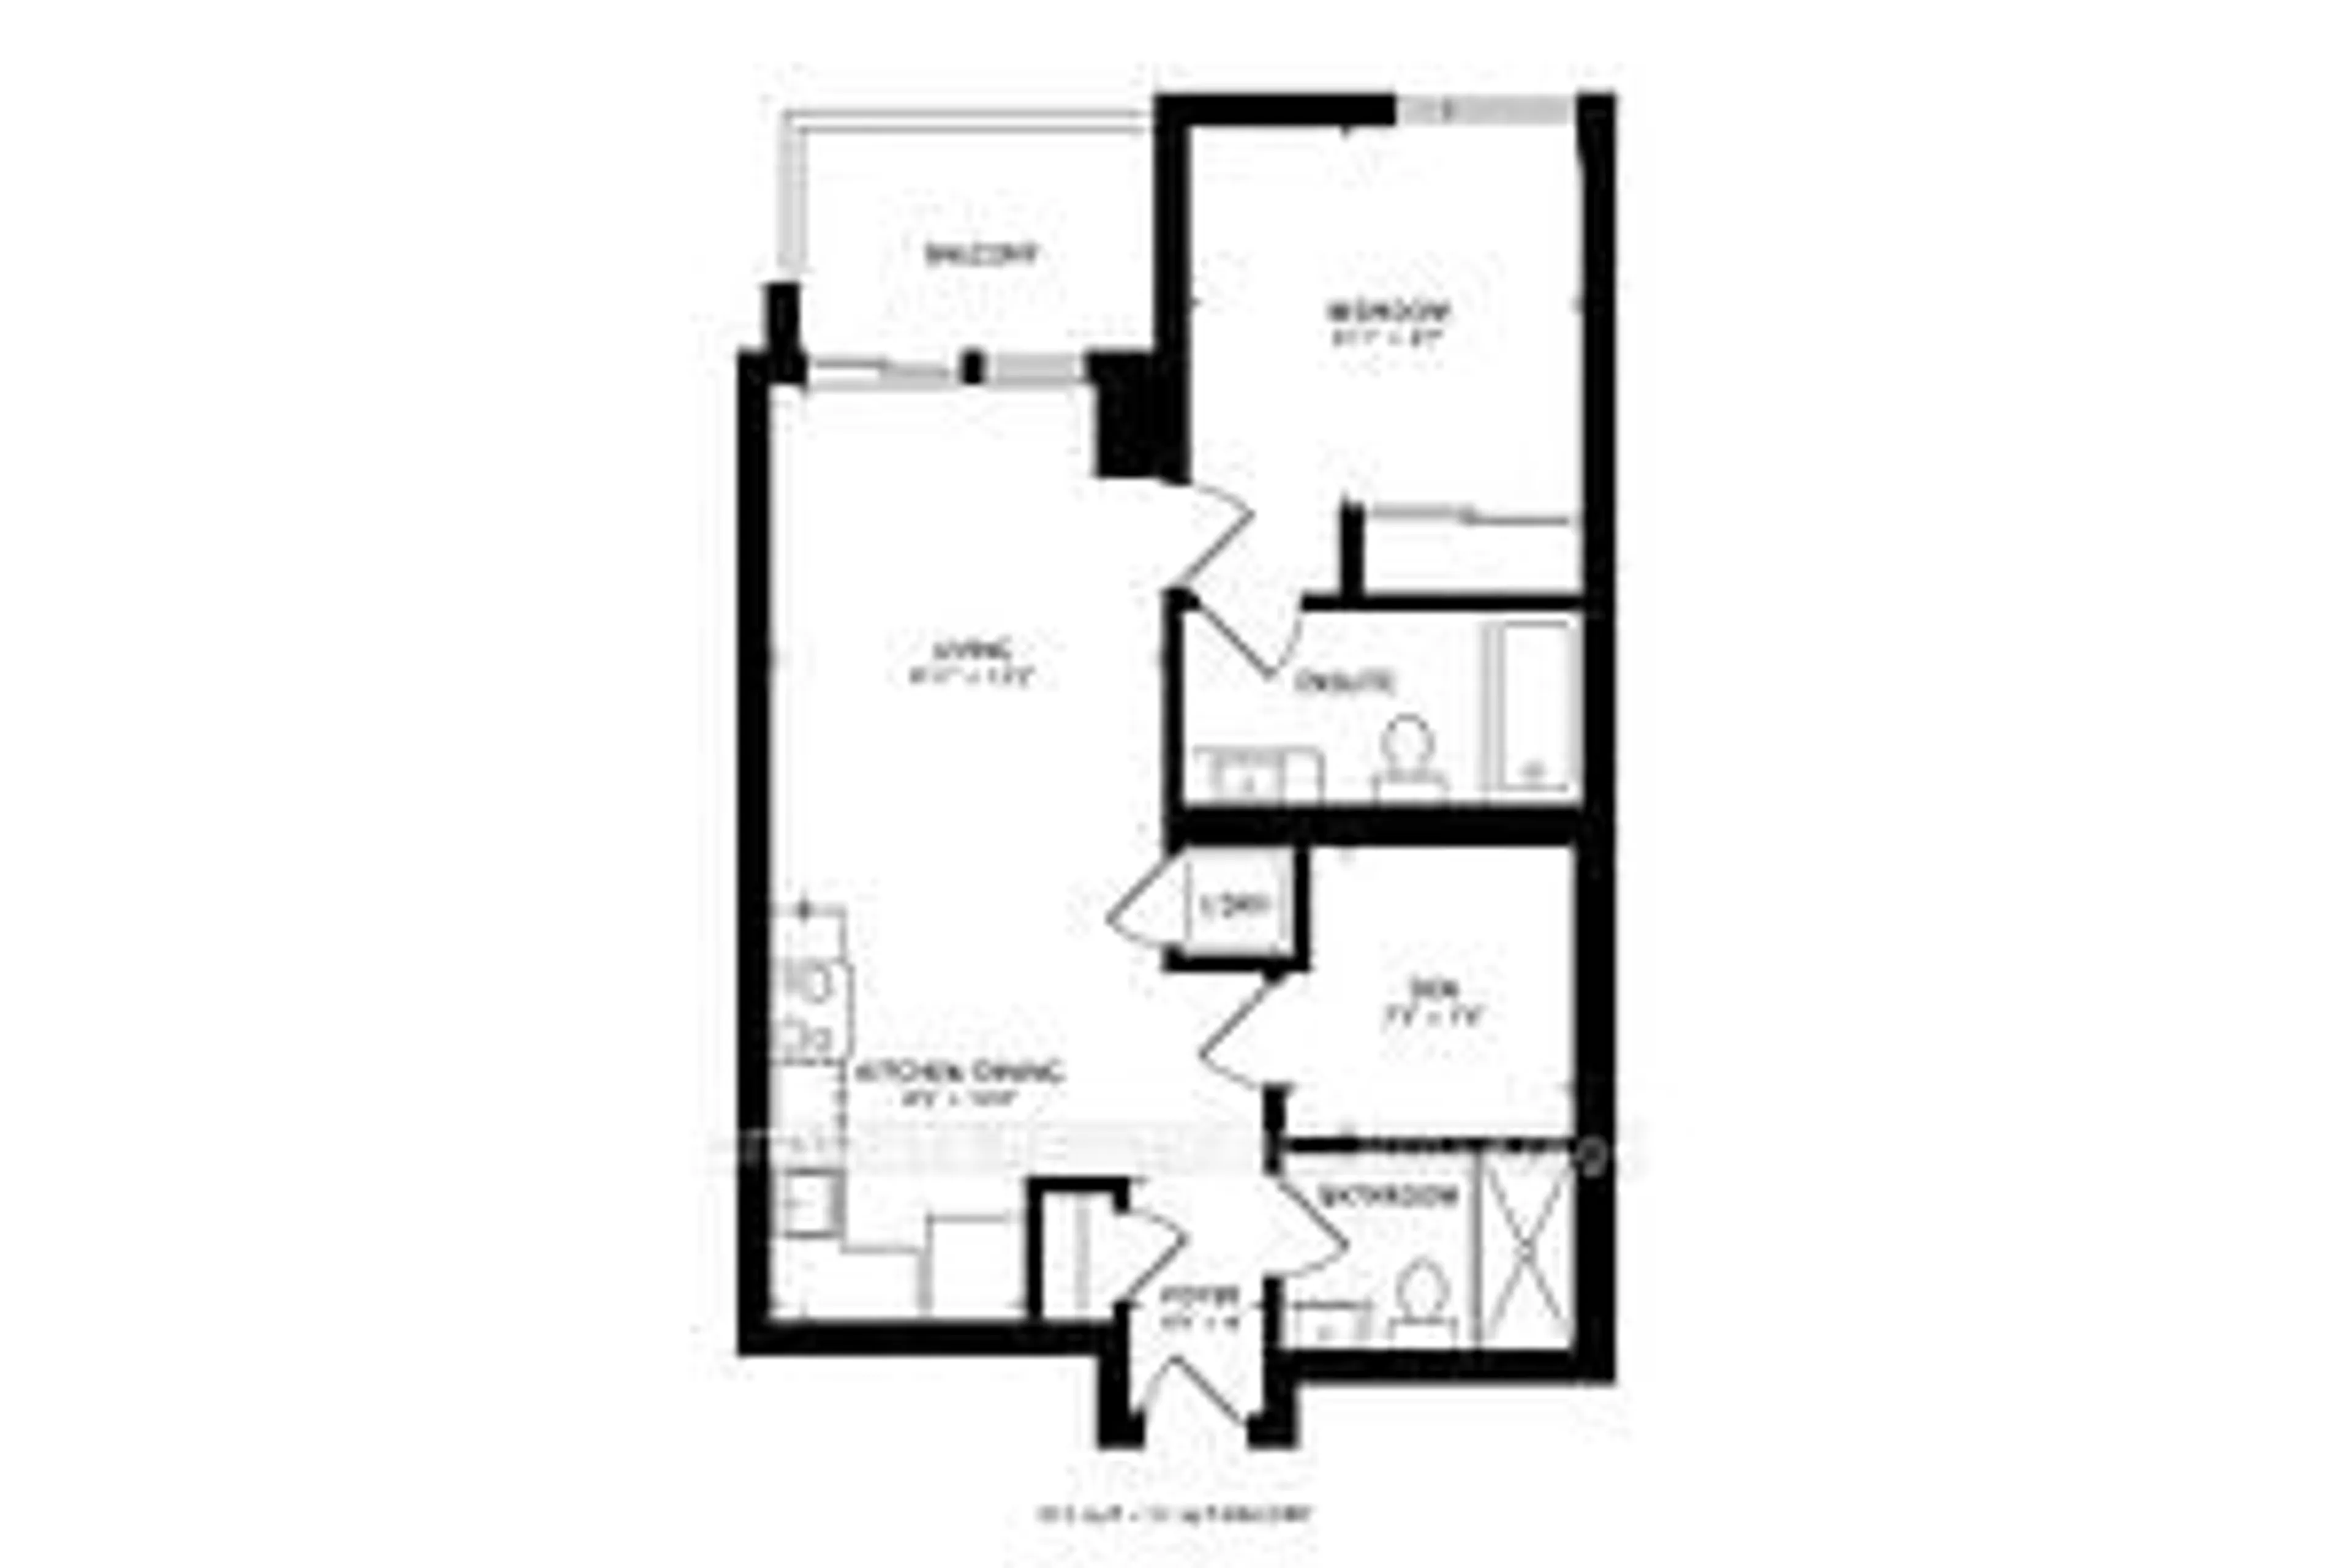 Floor plan for 17 Zorra St #1607, Toronto Ontario M8Z 4Z6